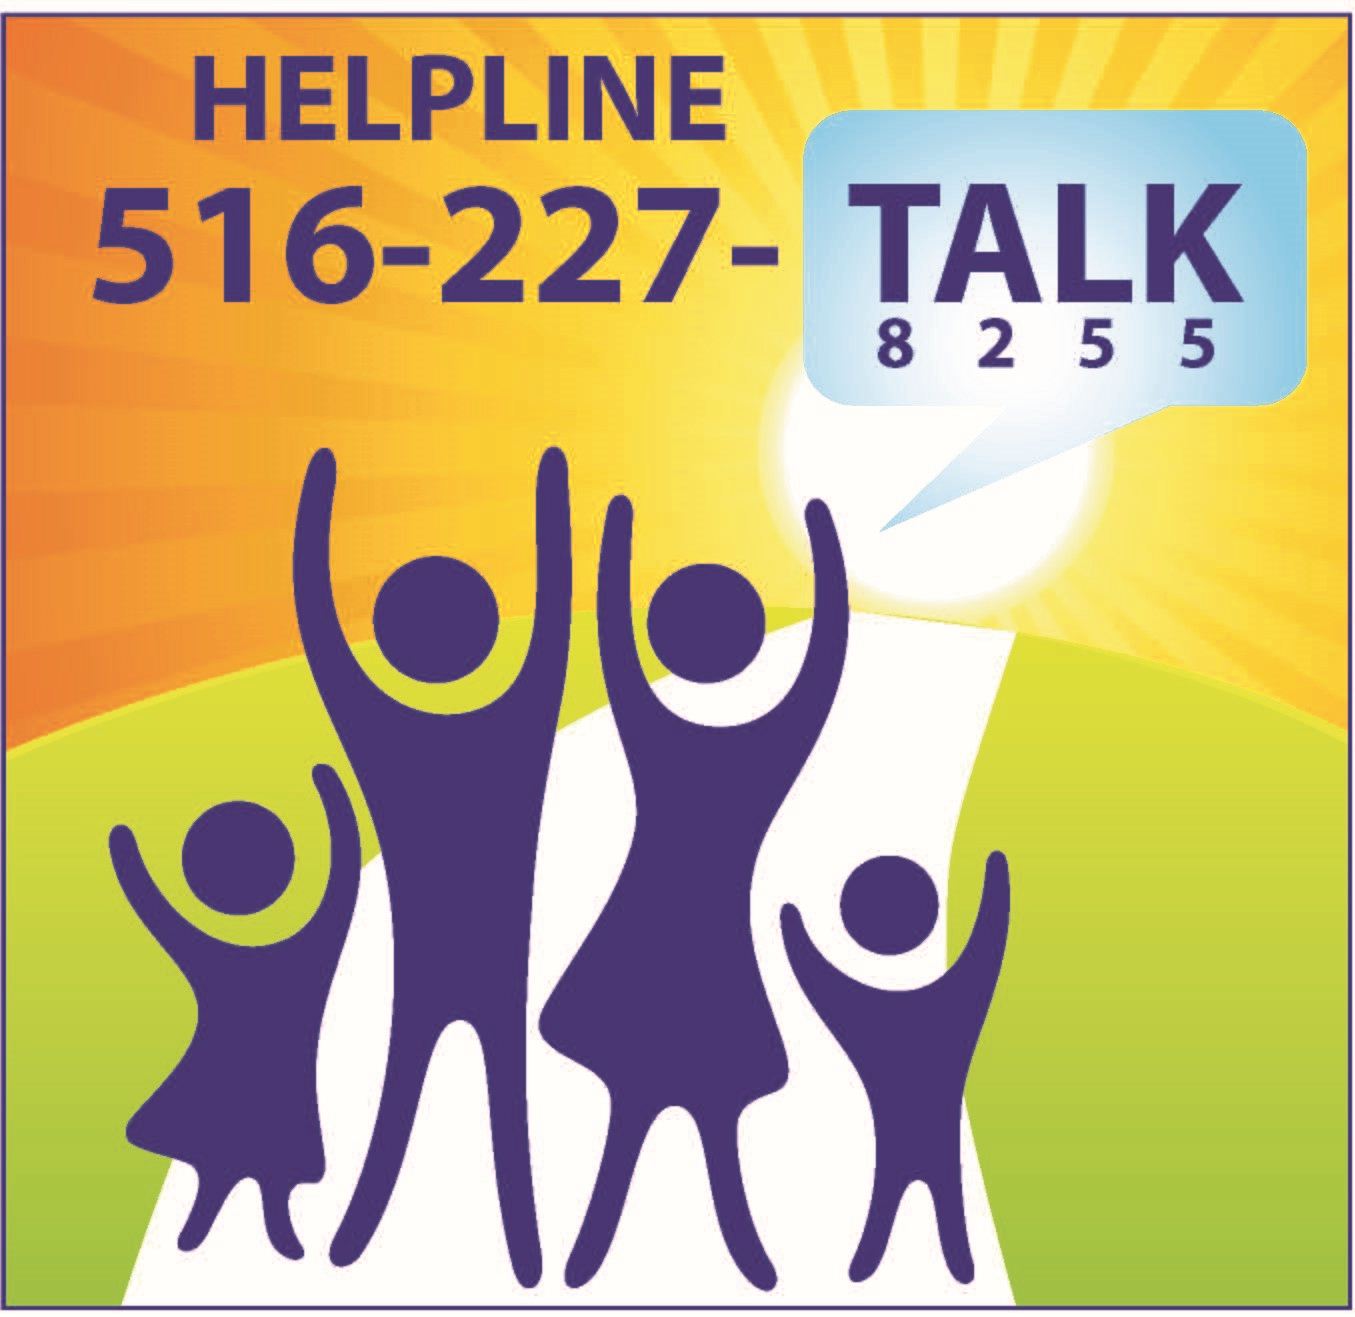 Helpline (516) 227-TALK